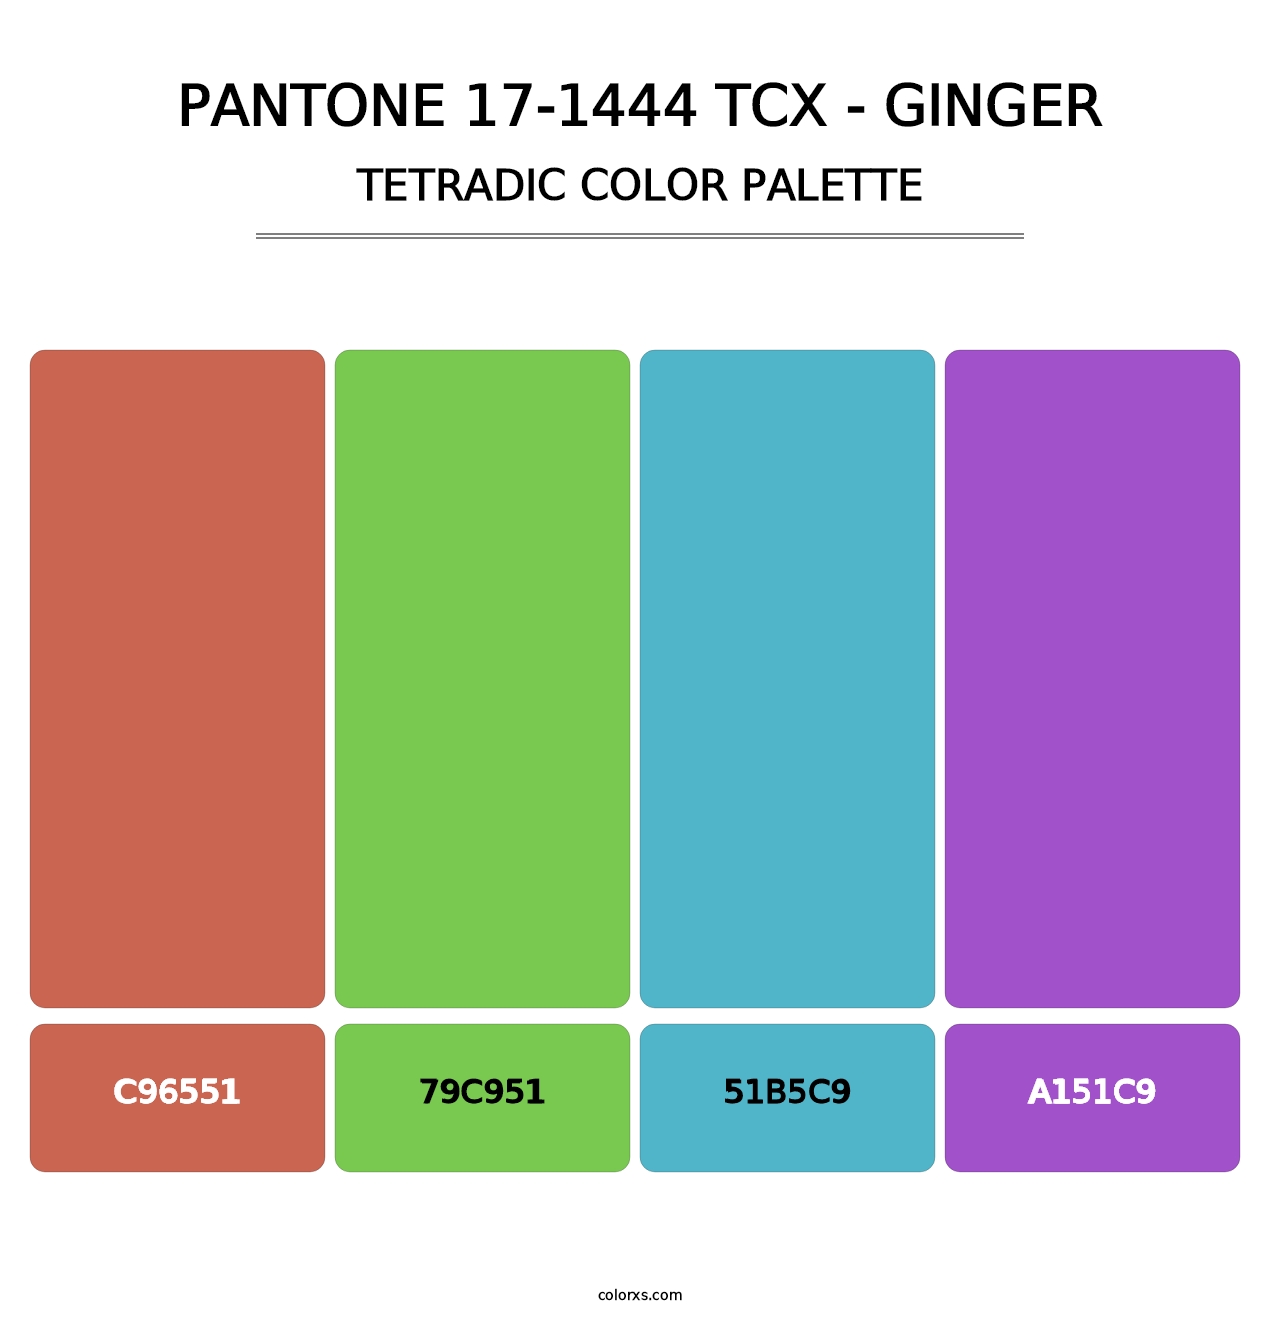 PANTONE 17-1444 TCX - Ginger - Tetradic Color Palette